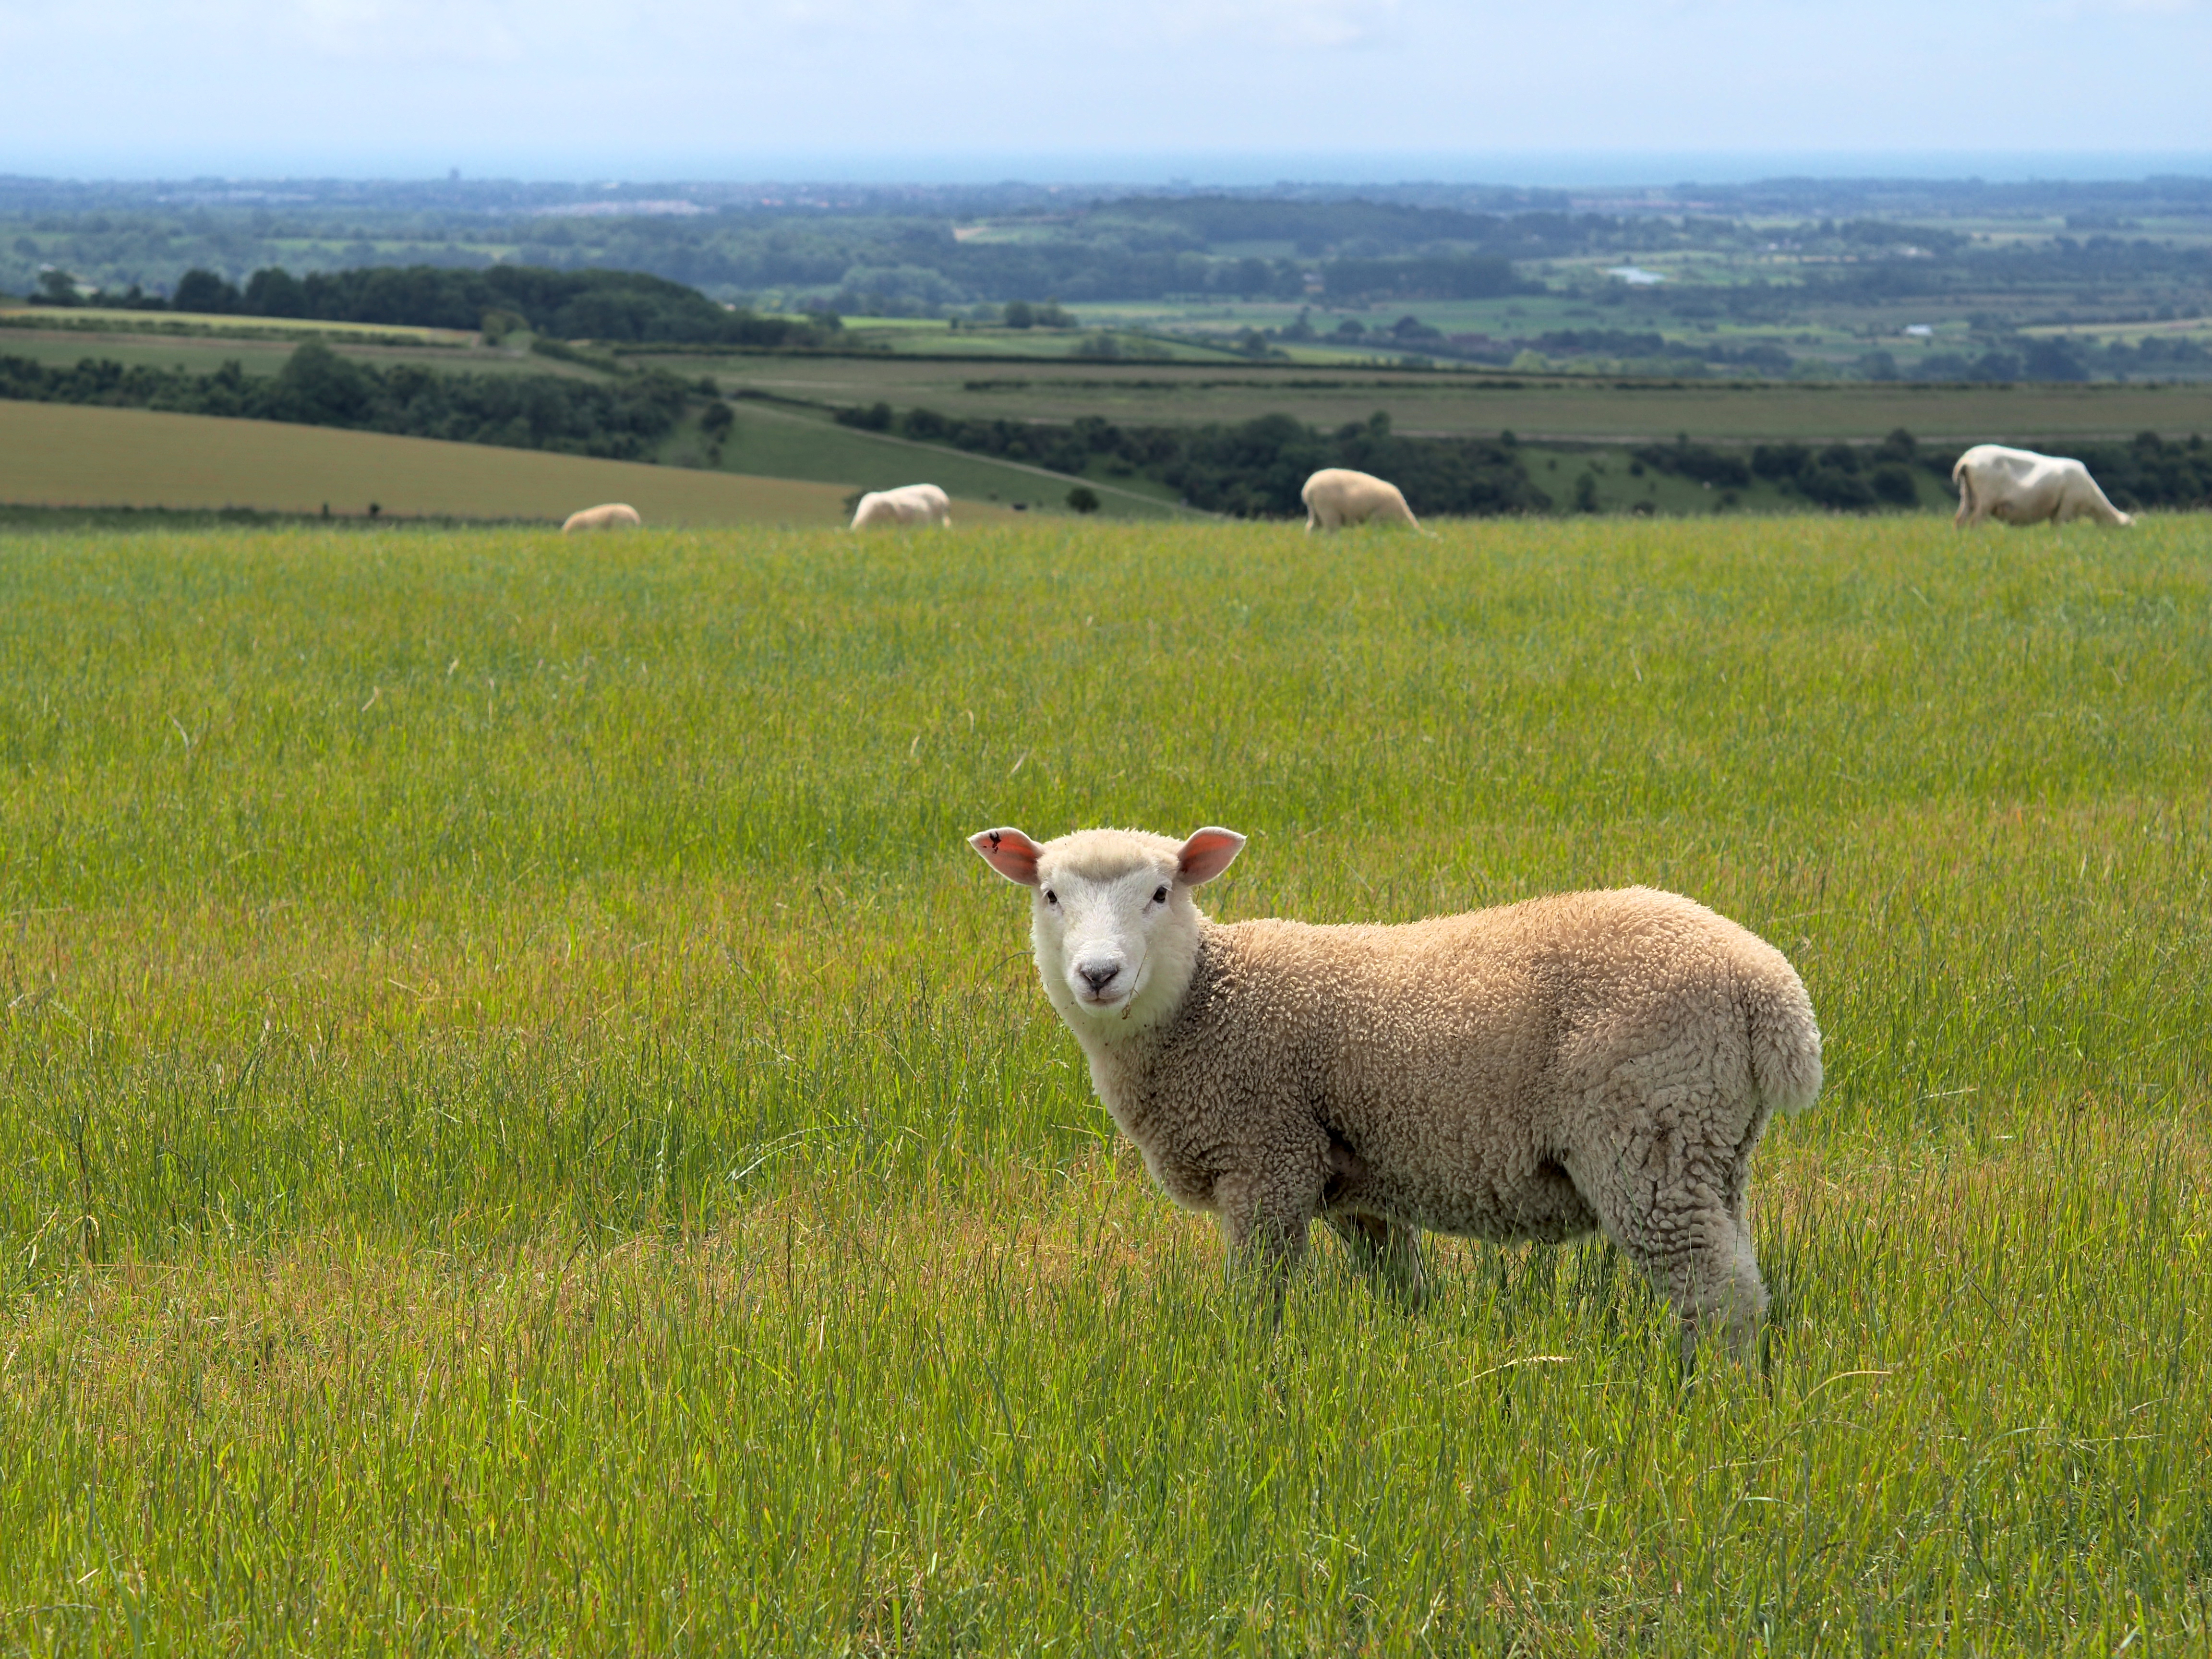 sheep in a green grassy field 